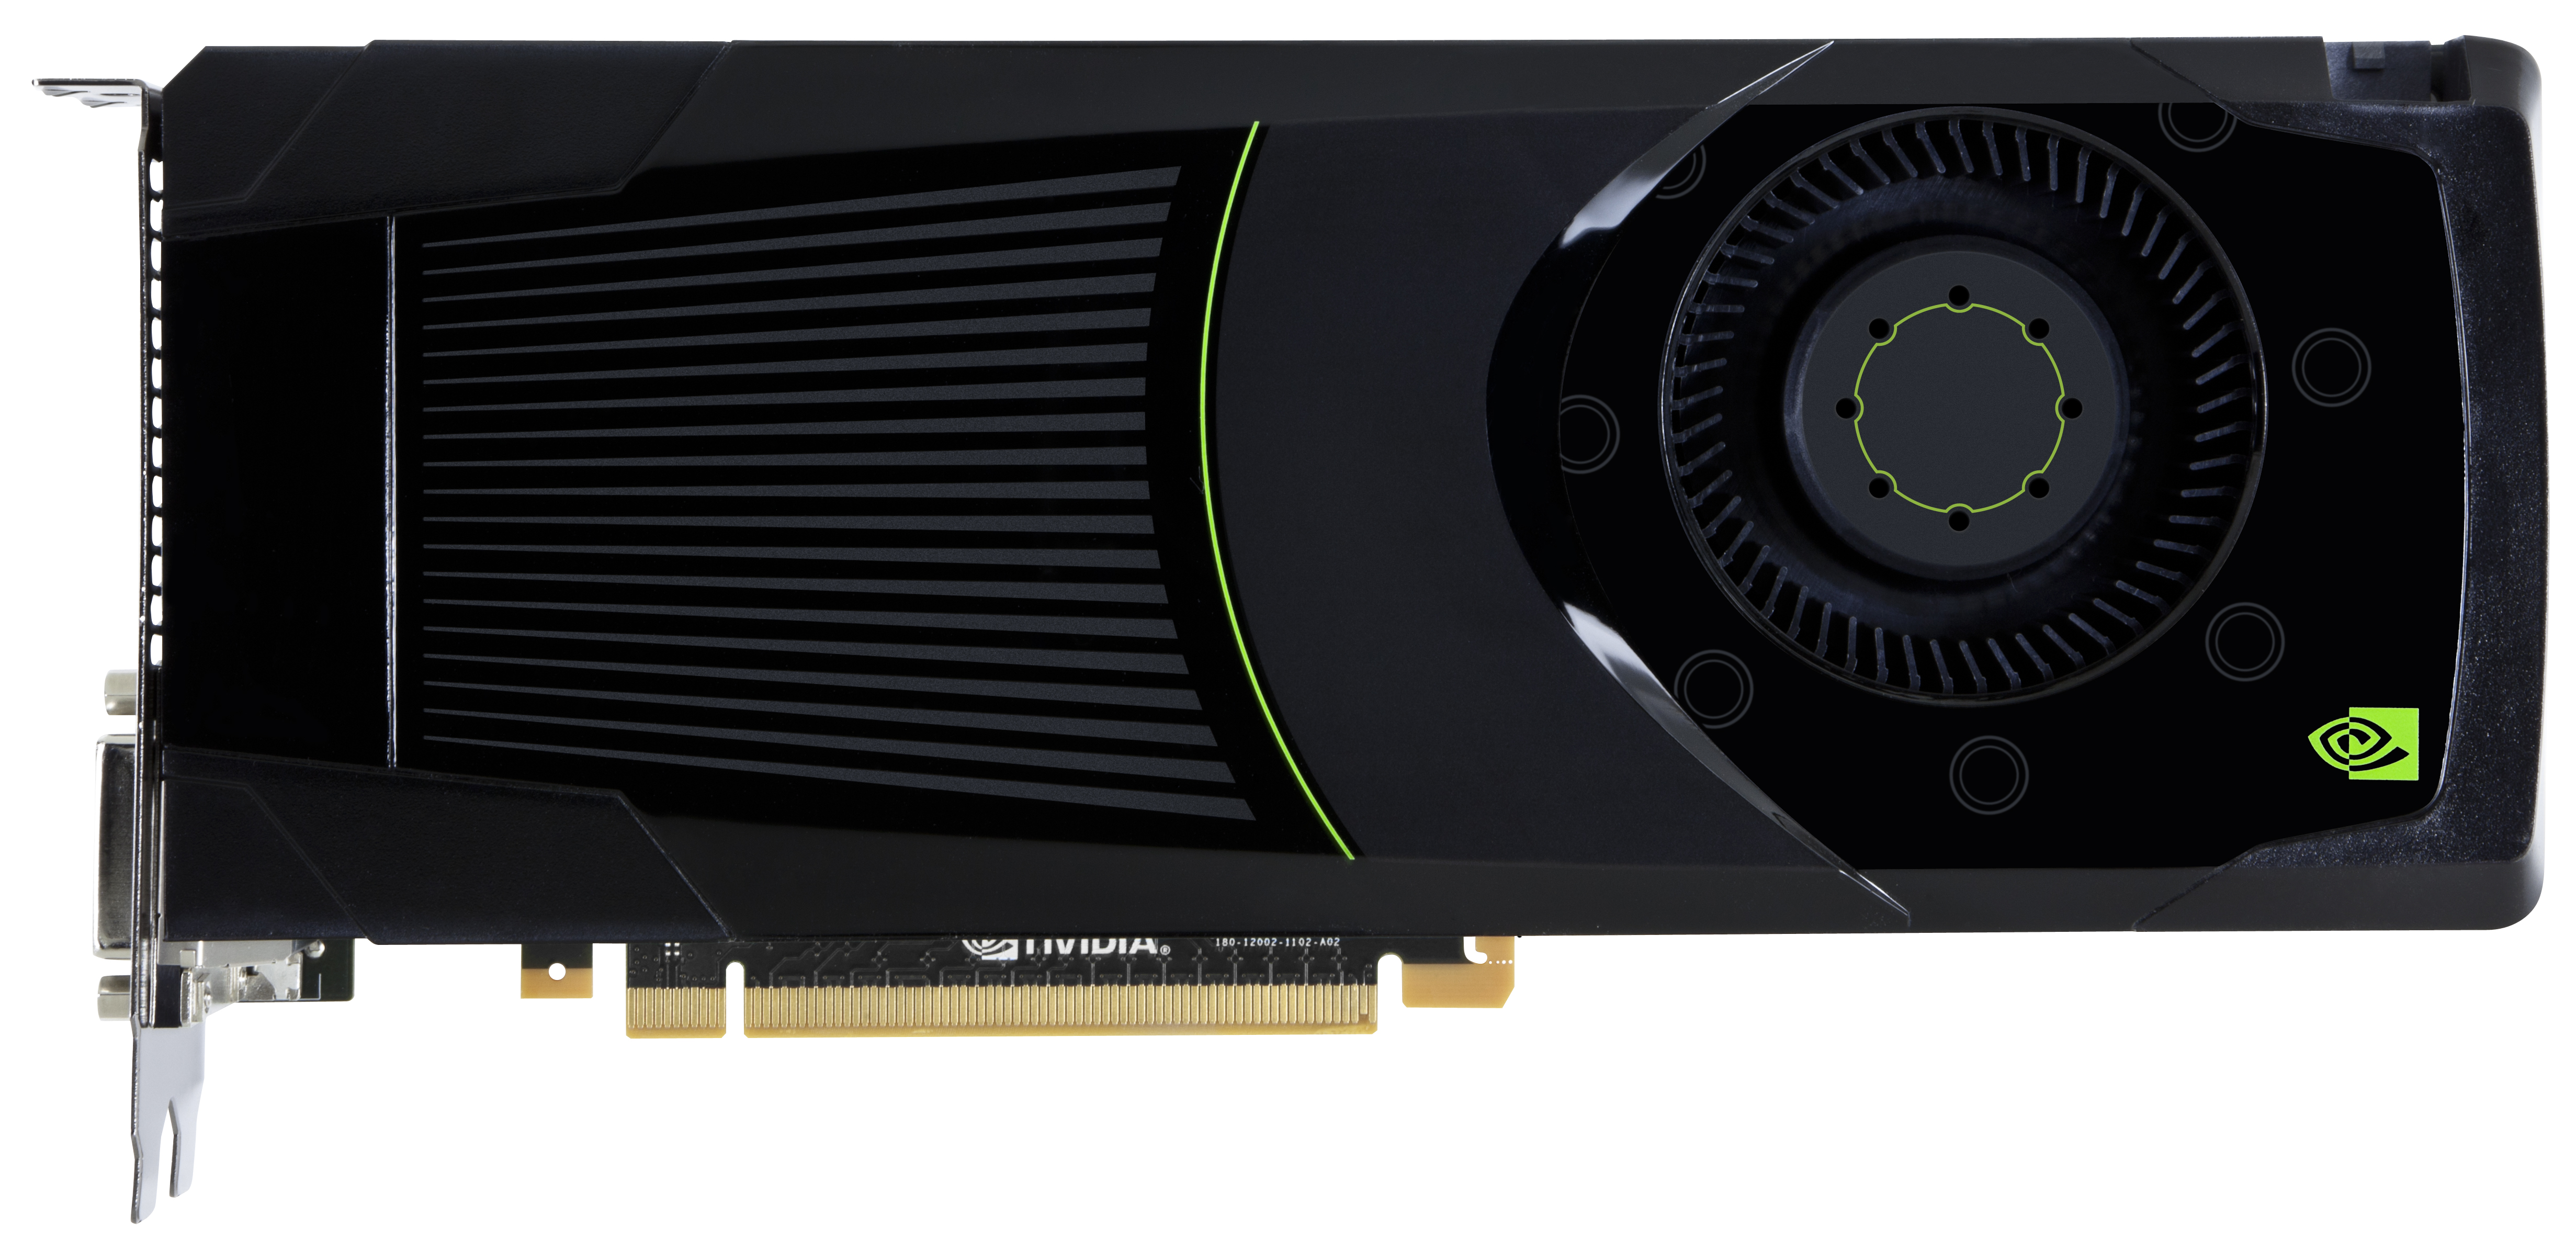 NVIDIA GeForce GTX 680 Review: Retaking 